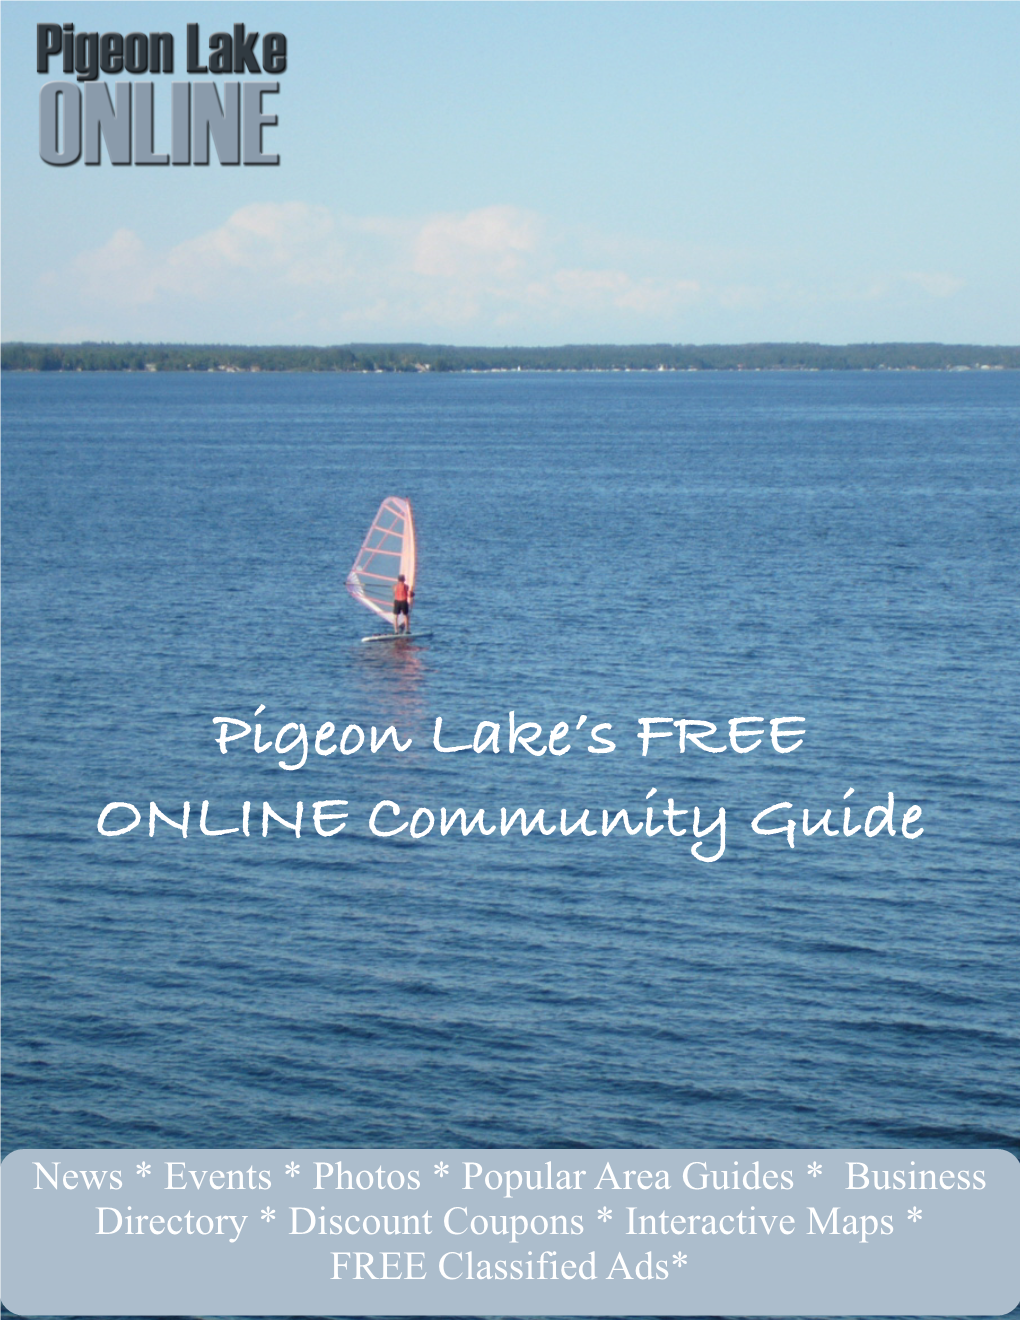 Pigeon Lake ONLINE Community Guide